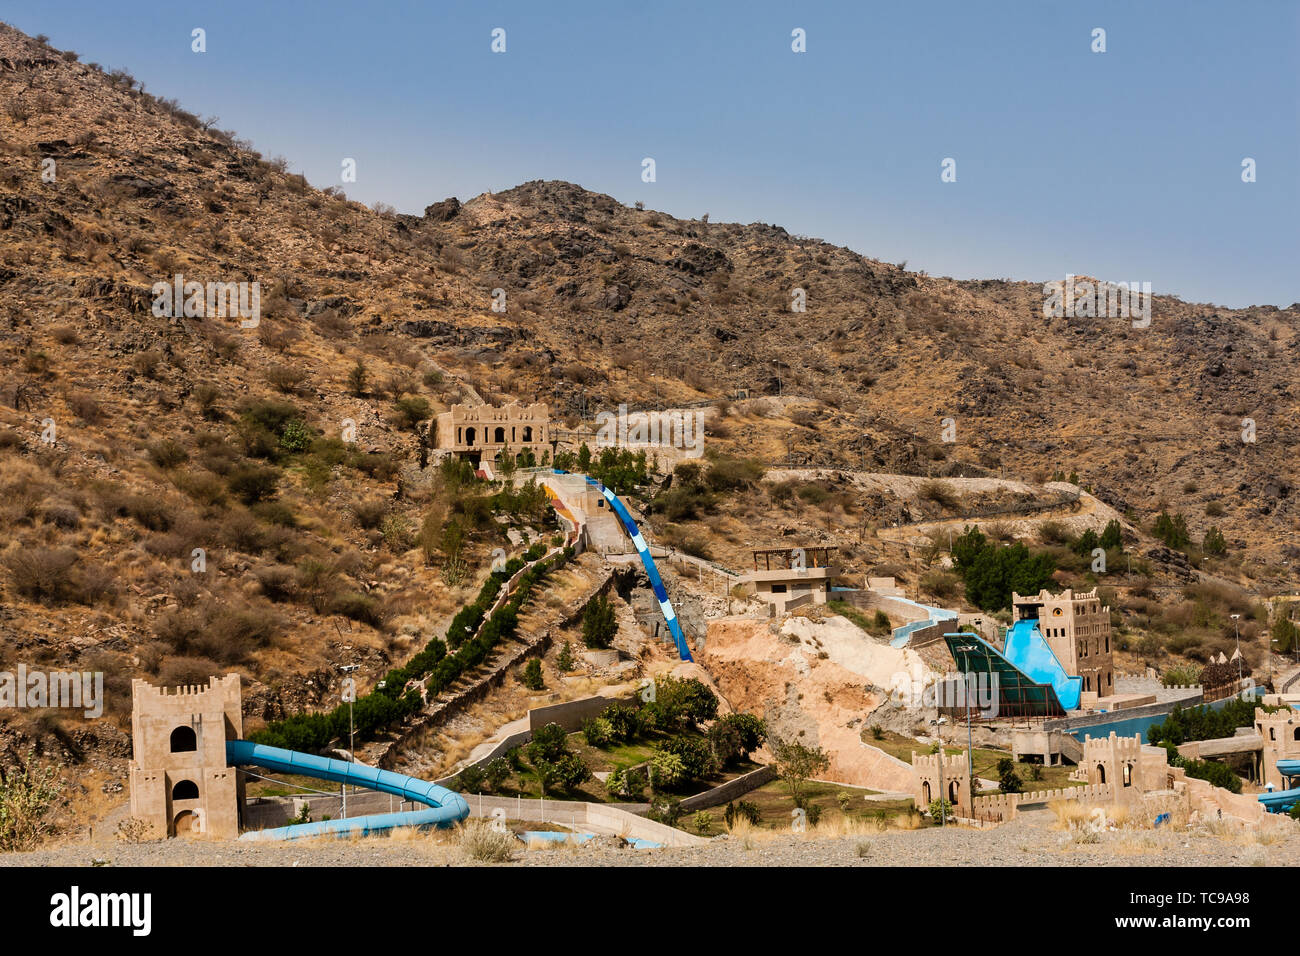 The Taif Water Amusement park in the mountains near Taif, Saudi Arabia Stock Photo